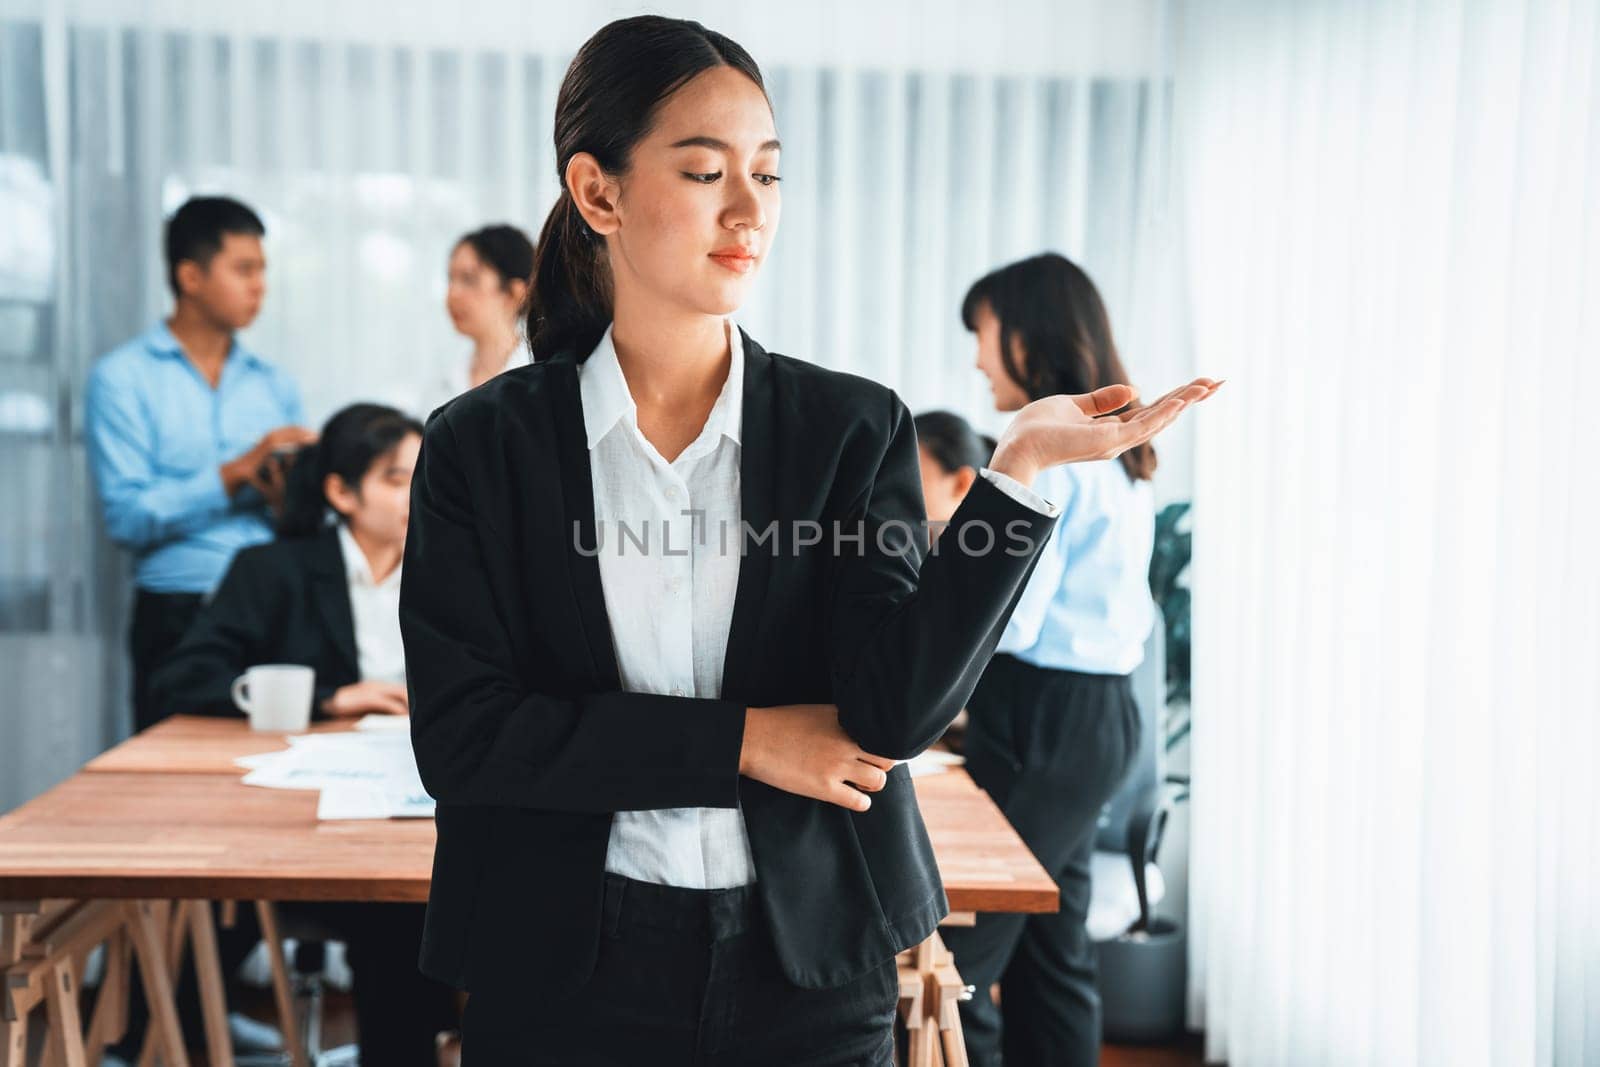 Businesswoman portrait and motion blur background. Habiliment by biancoblue